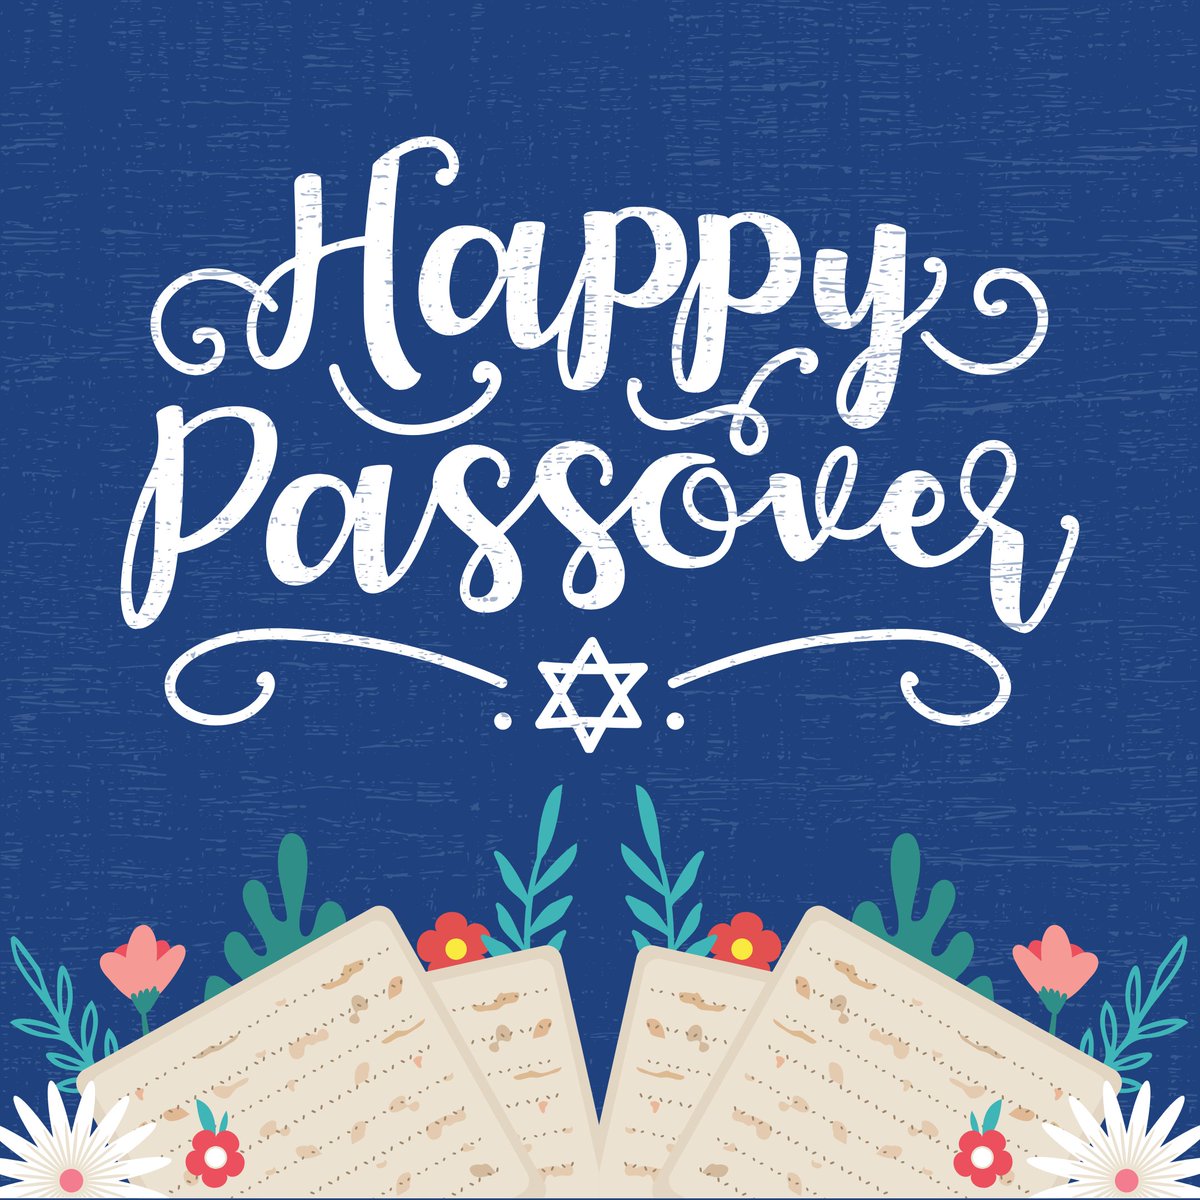 Happy Passover to all celebrating! Chag sameach!